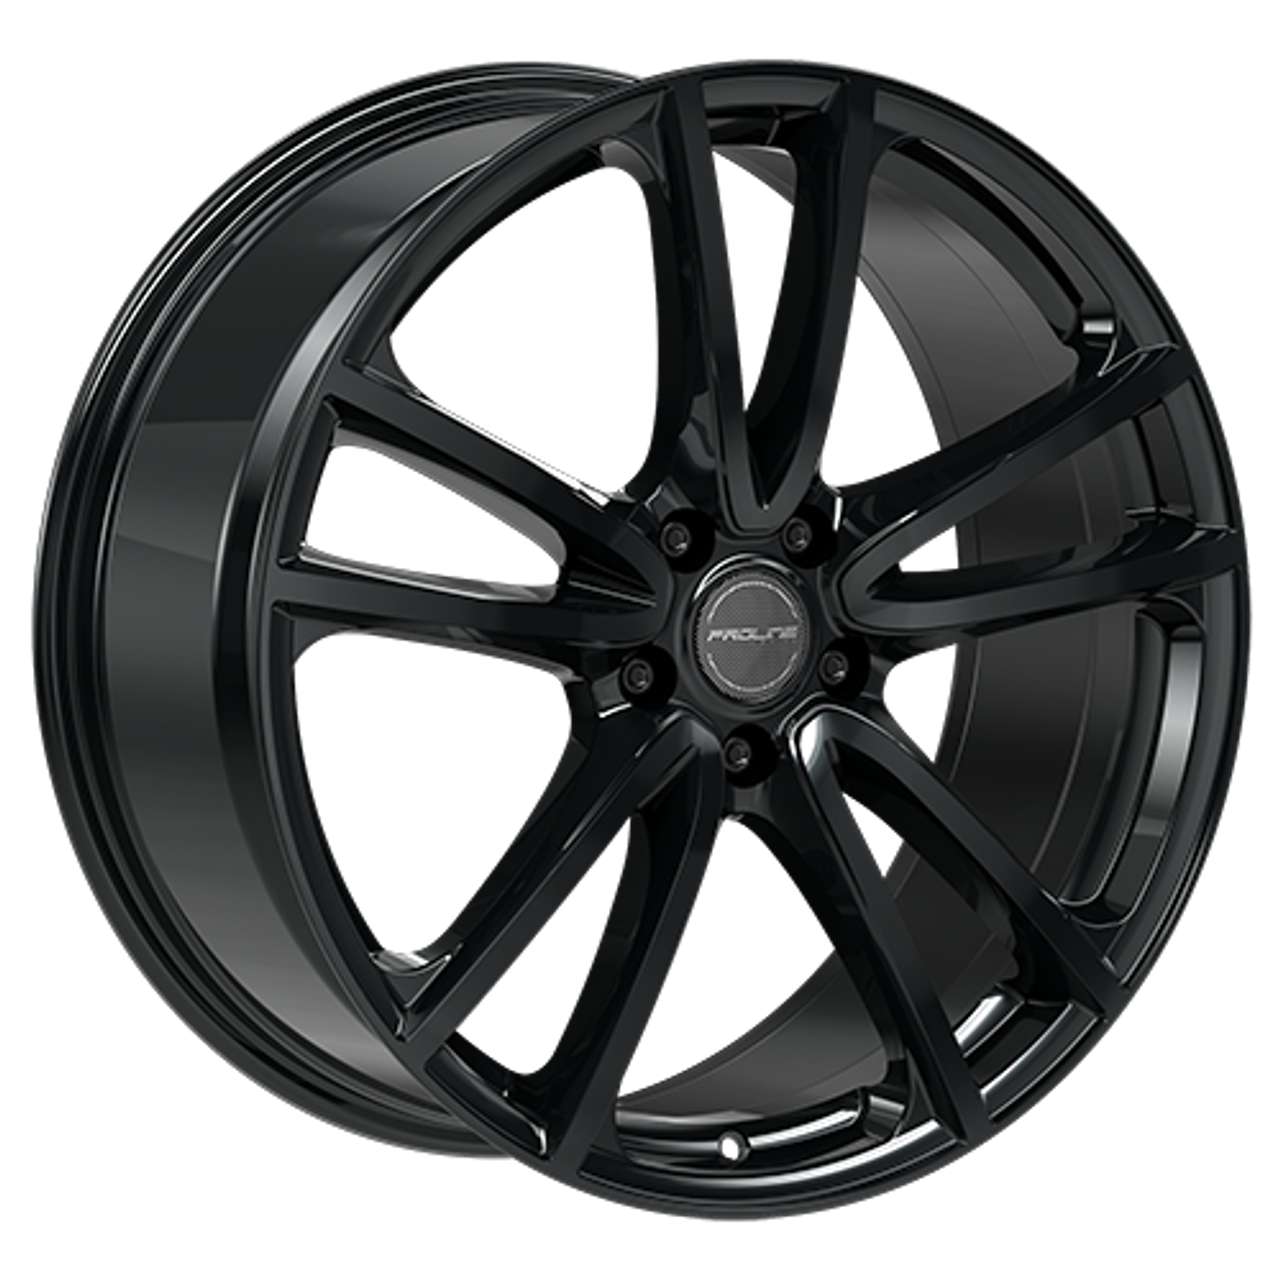 PROLINE CX300 black glossy 8.5Jx20 5x112 ET25 von Proline